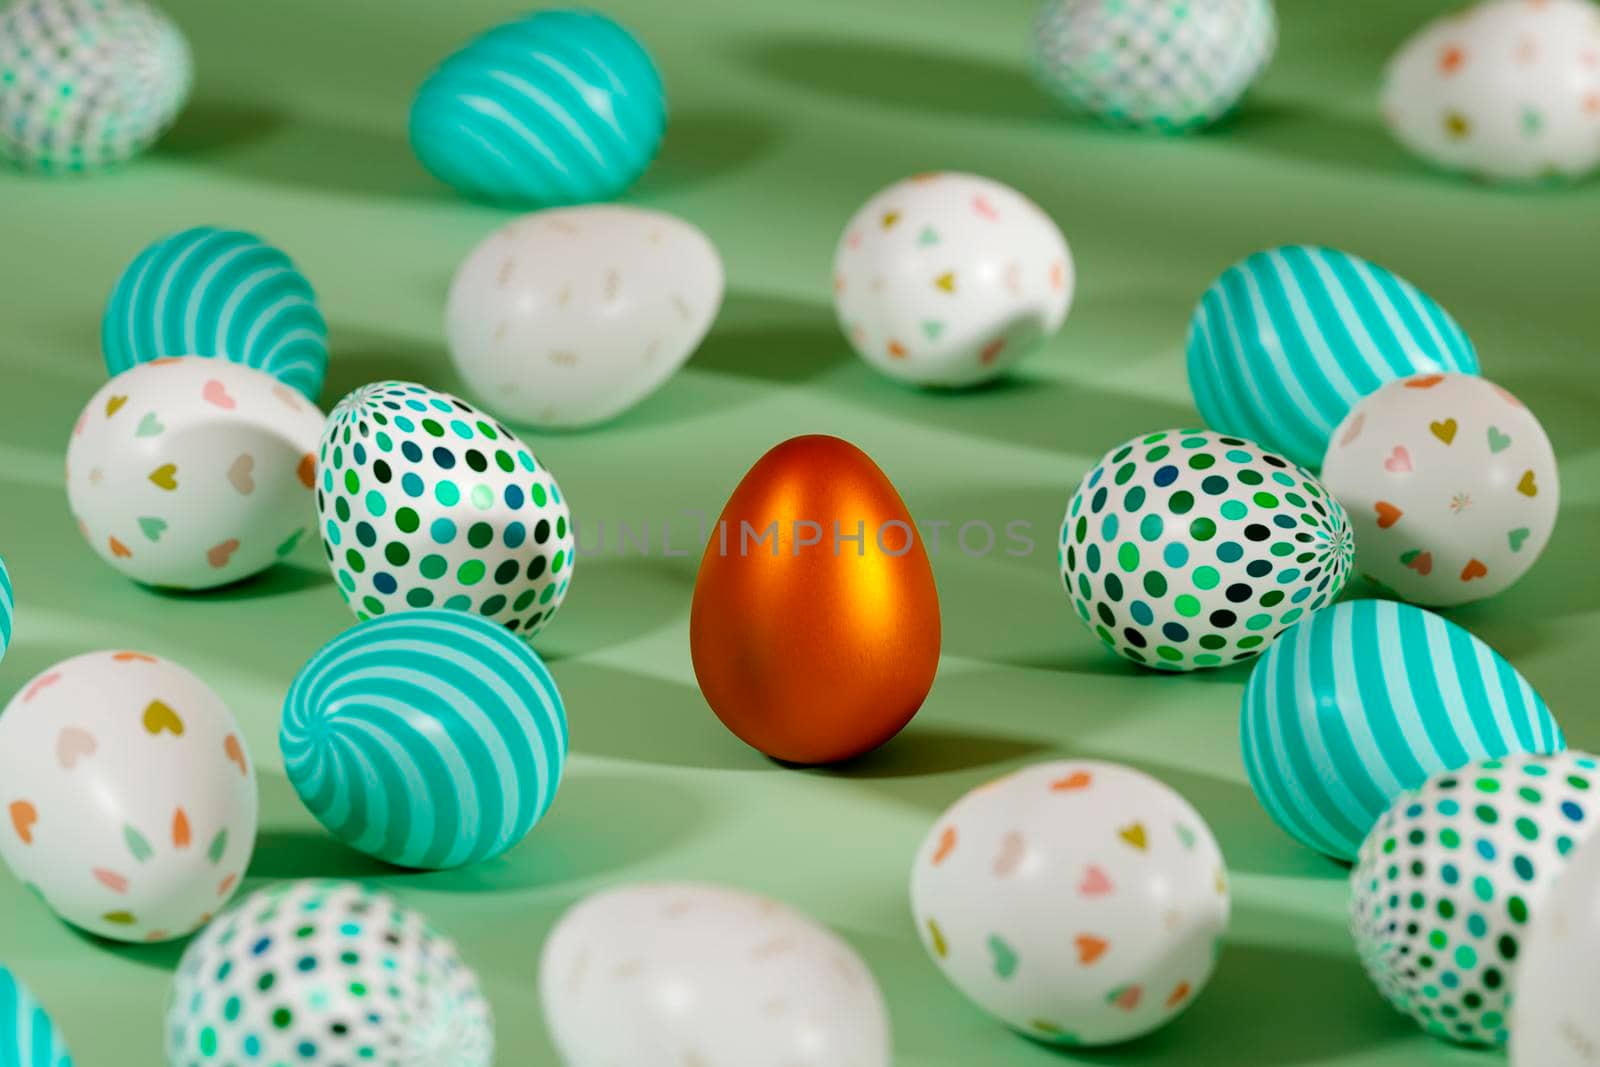 Colored Easter eggs surrounding golden egg on green background. 3d illustration by raferto1973